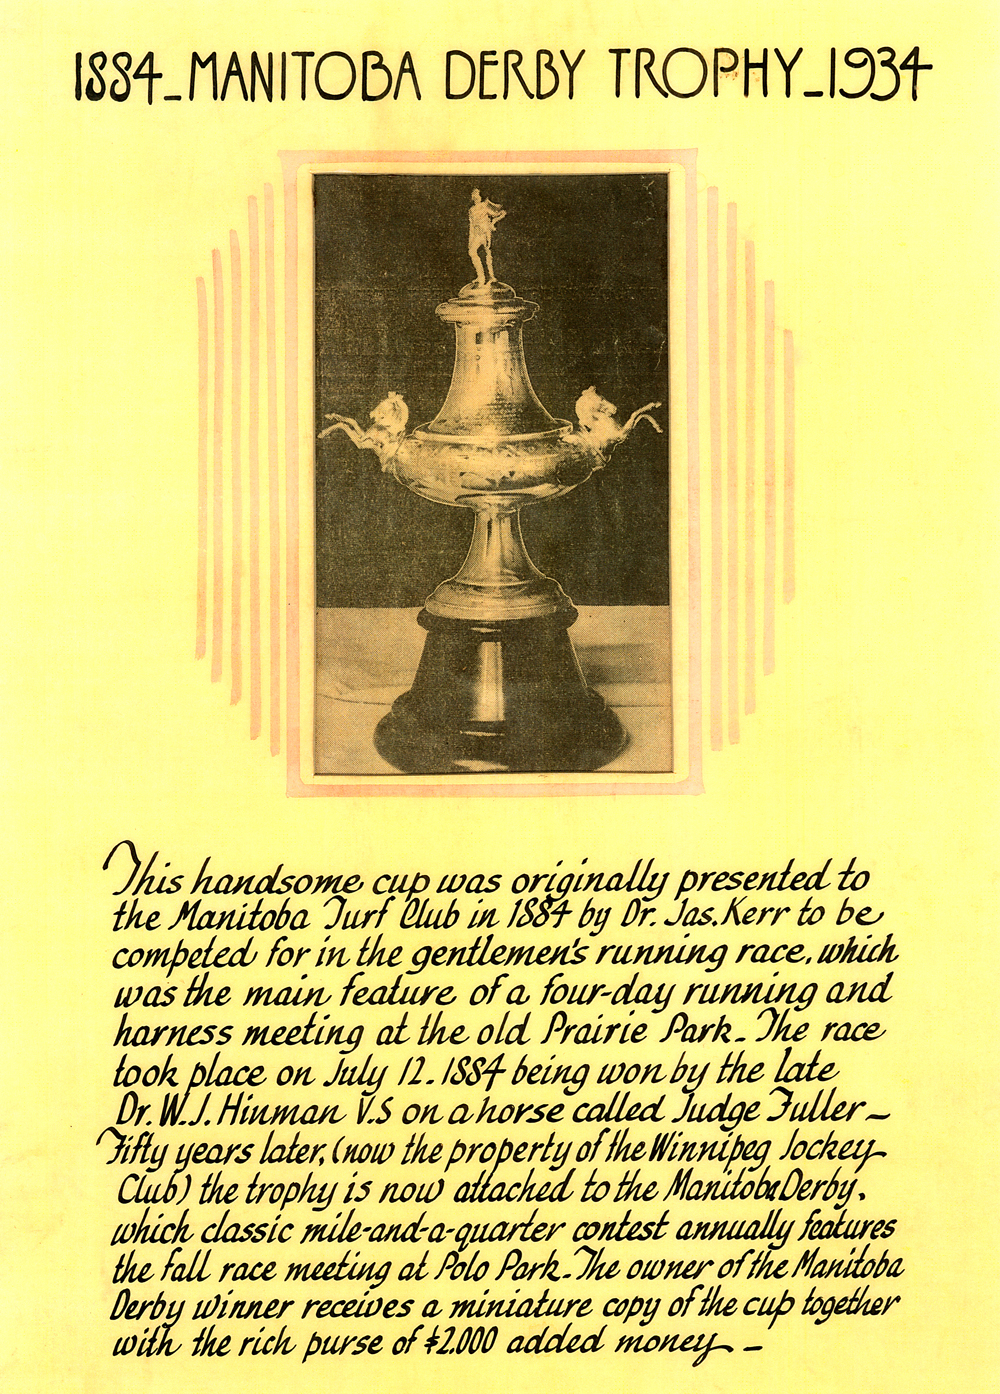 Manitoba Derby Trophy 1884-1934.